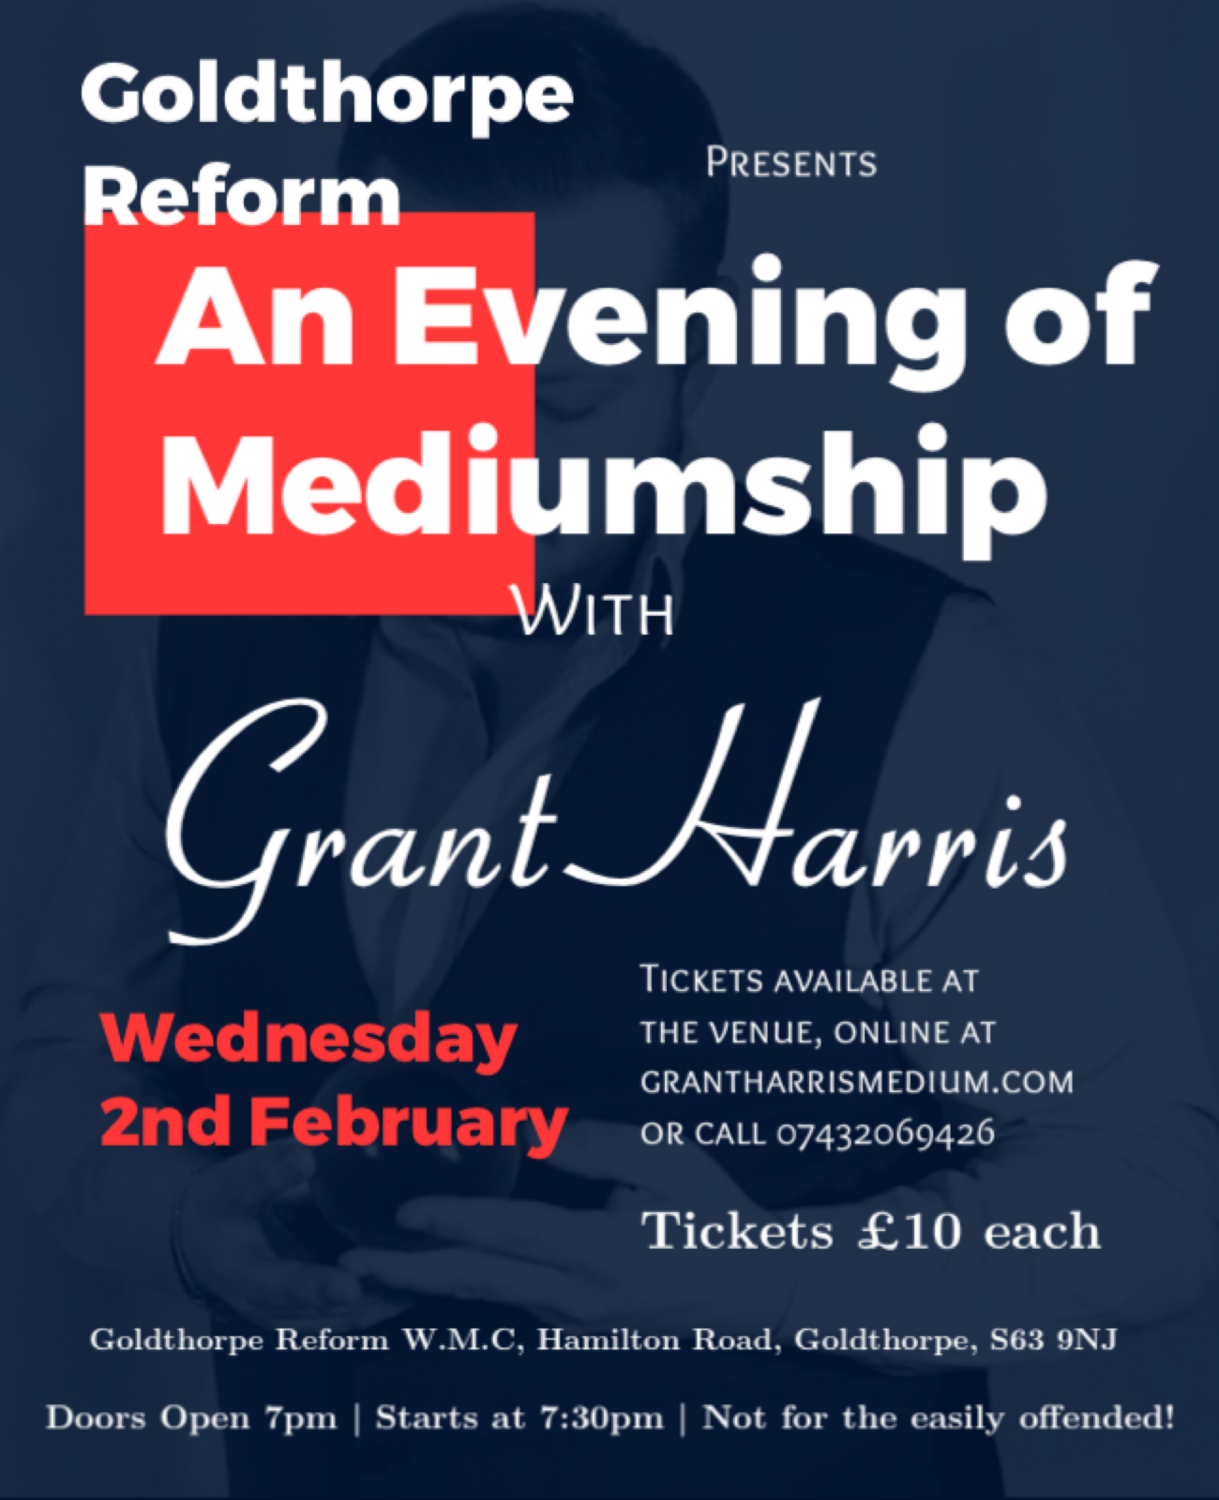 Evening of Mediumship, Goldthorpe Reform, Wed 5th October 2022